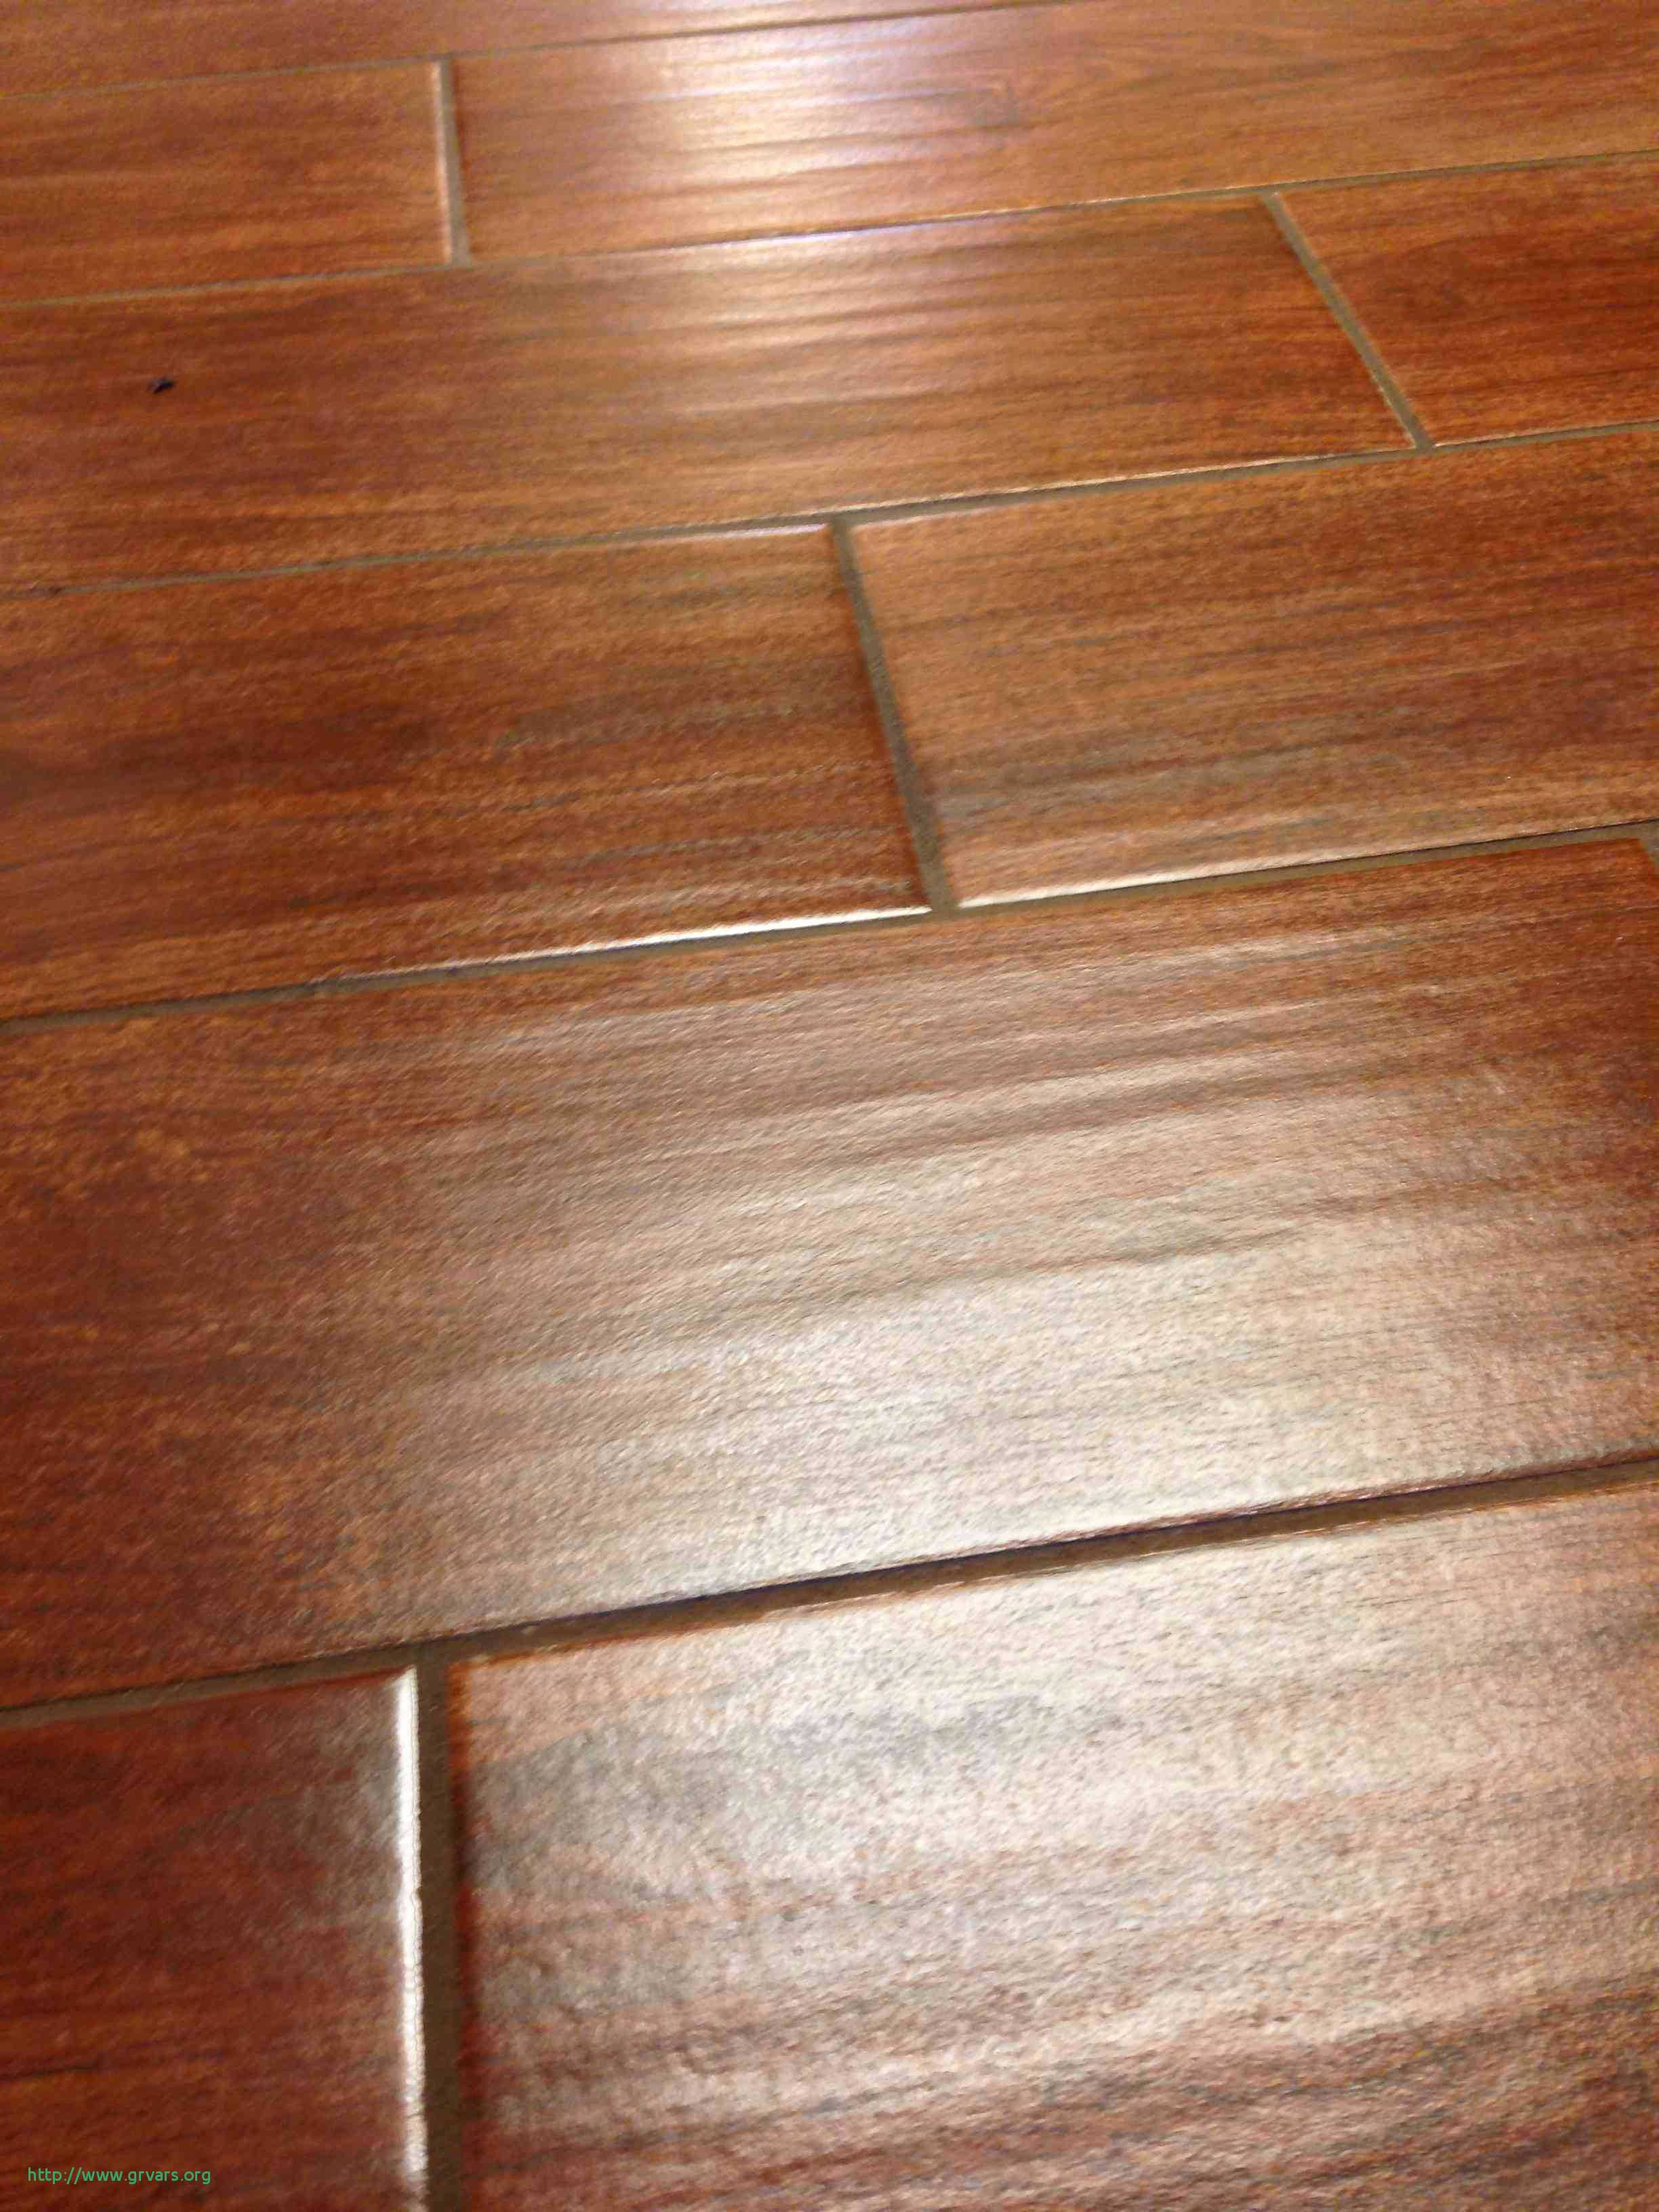 hardwood floor refinishing of 22 luxe hardwood floor refinishing winston salem nc ideas blog intended for harwood flooring best tile that looks like hardwood floors elegant i pinimg 736x 0d 7b